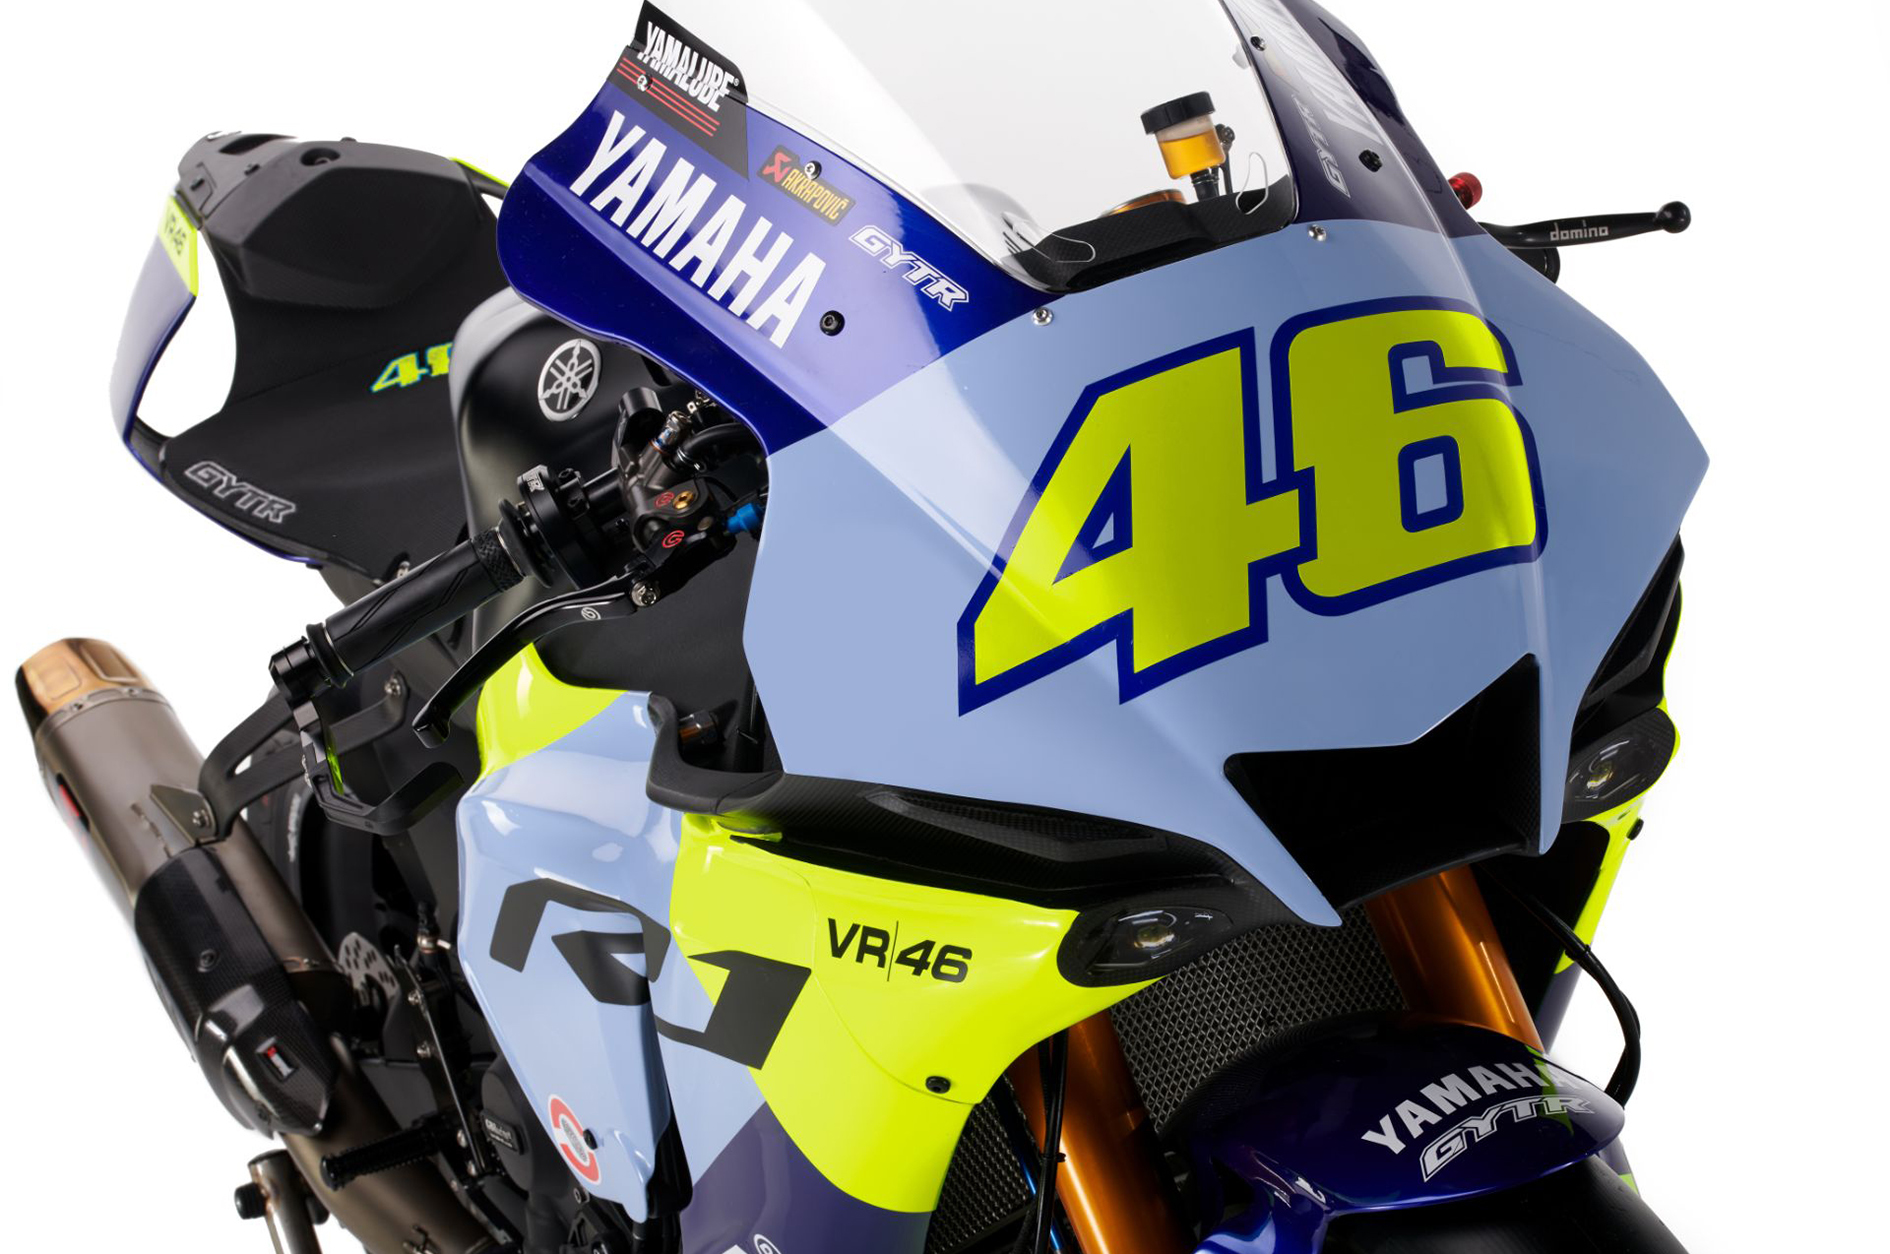 Valentino Rossi - Yamaha - R1 - Special R1 GYTR VR46 Tribute - moto unica